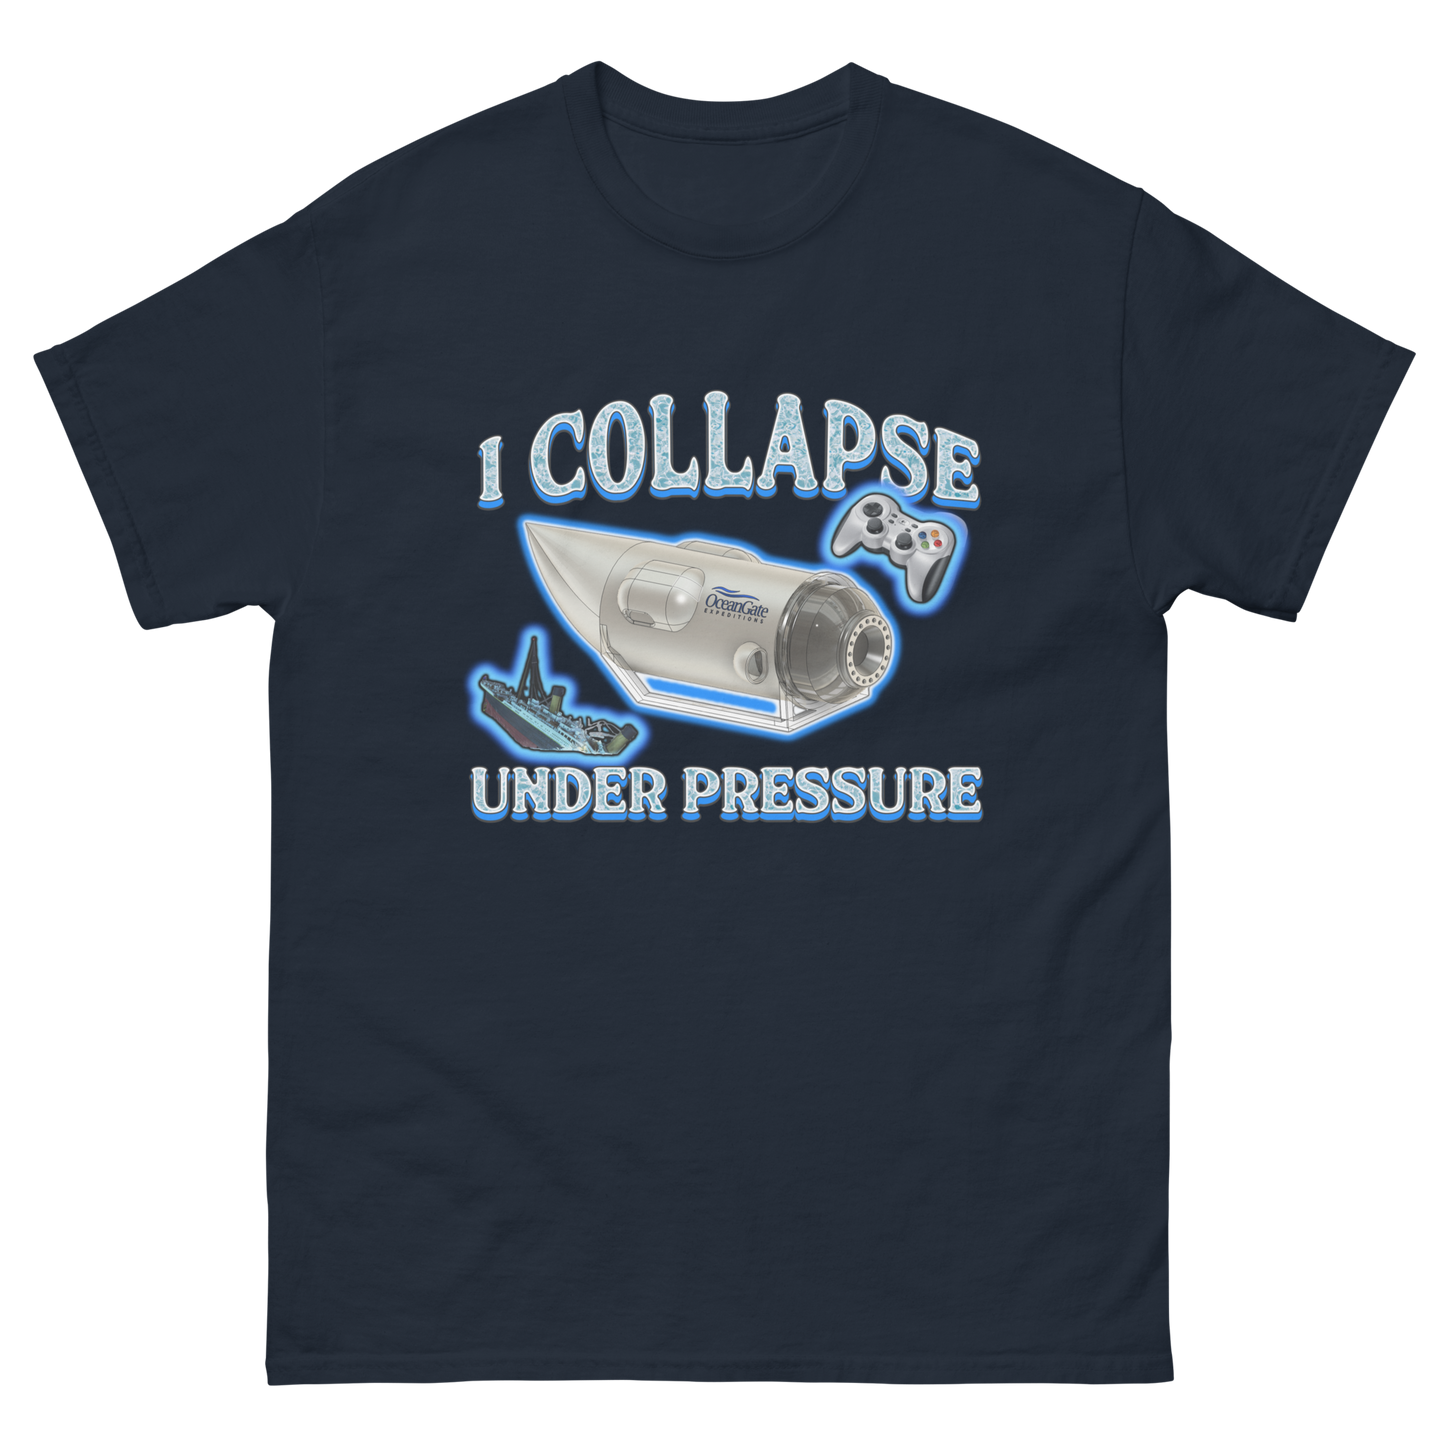 I Collapse Under Pressure.